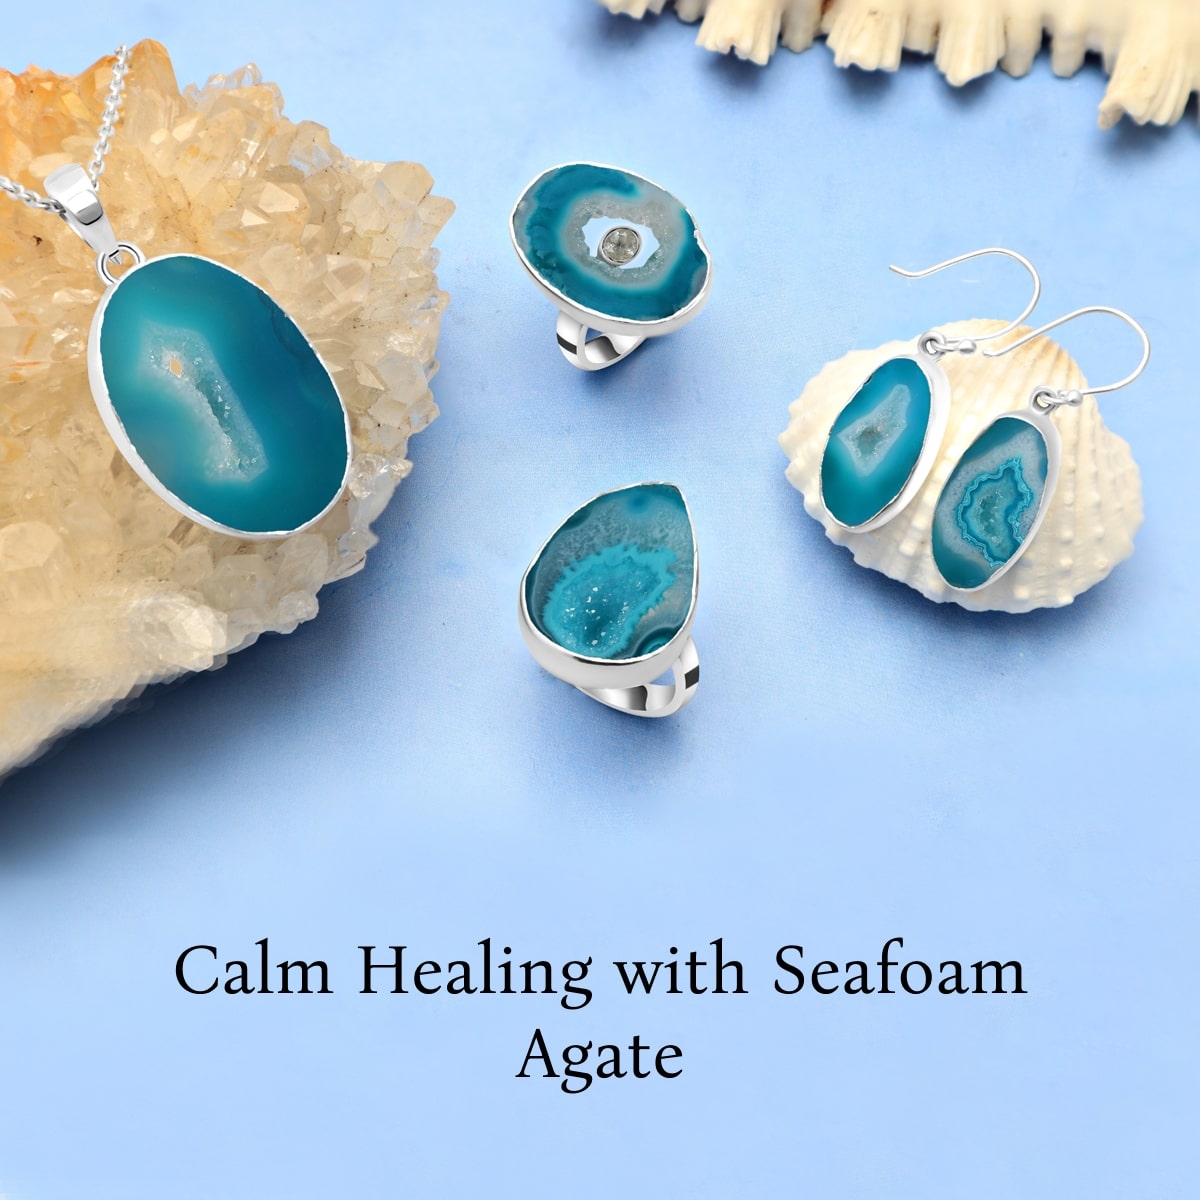 Healing Properties of Seafoam agate